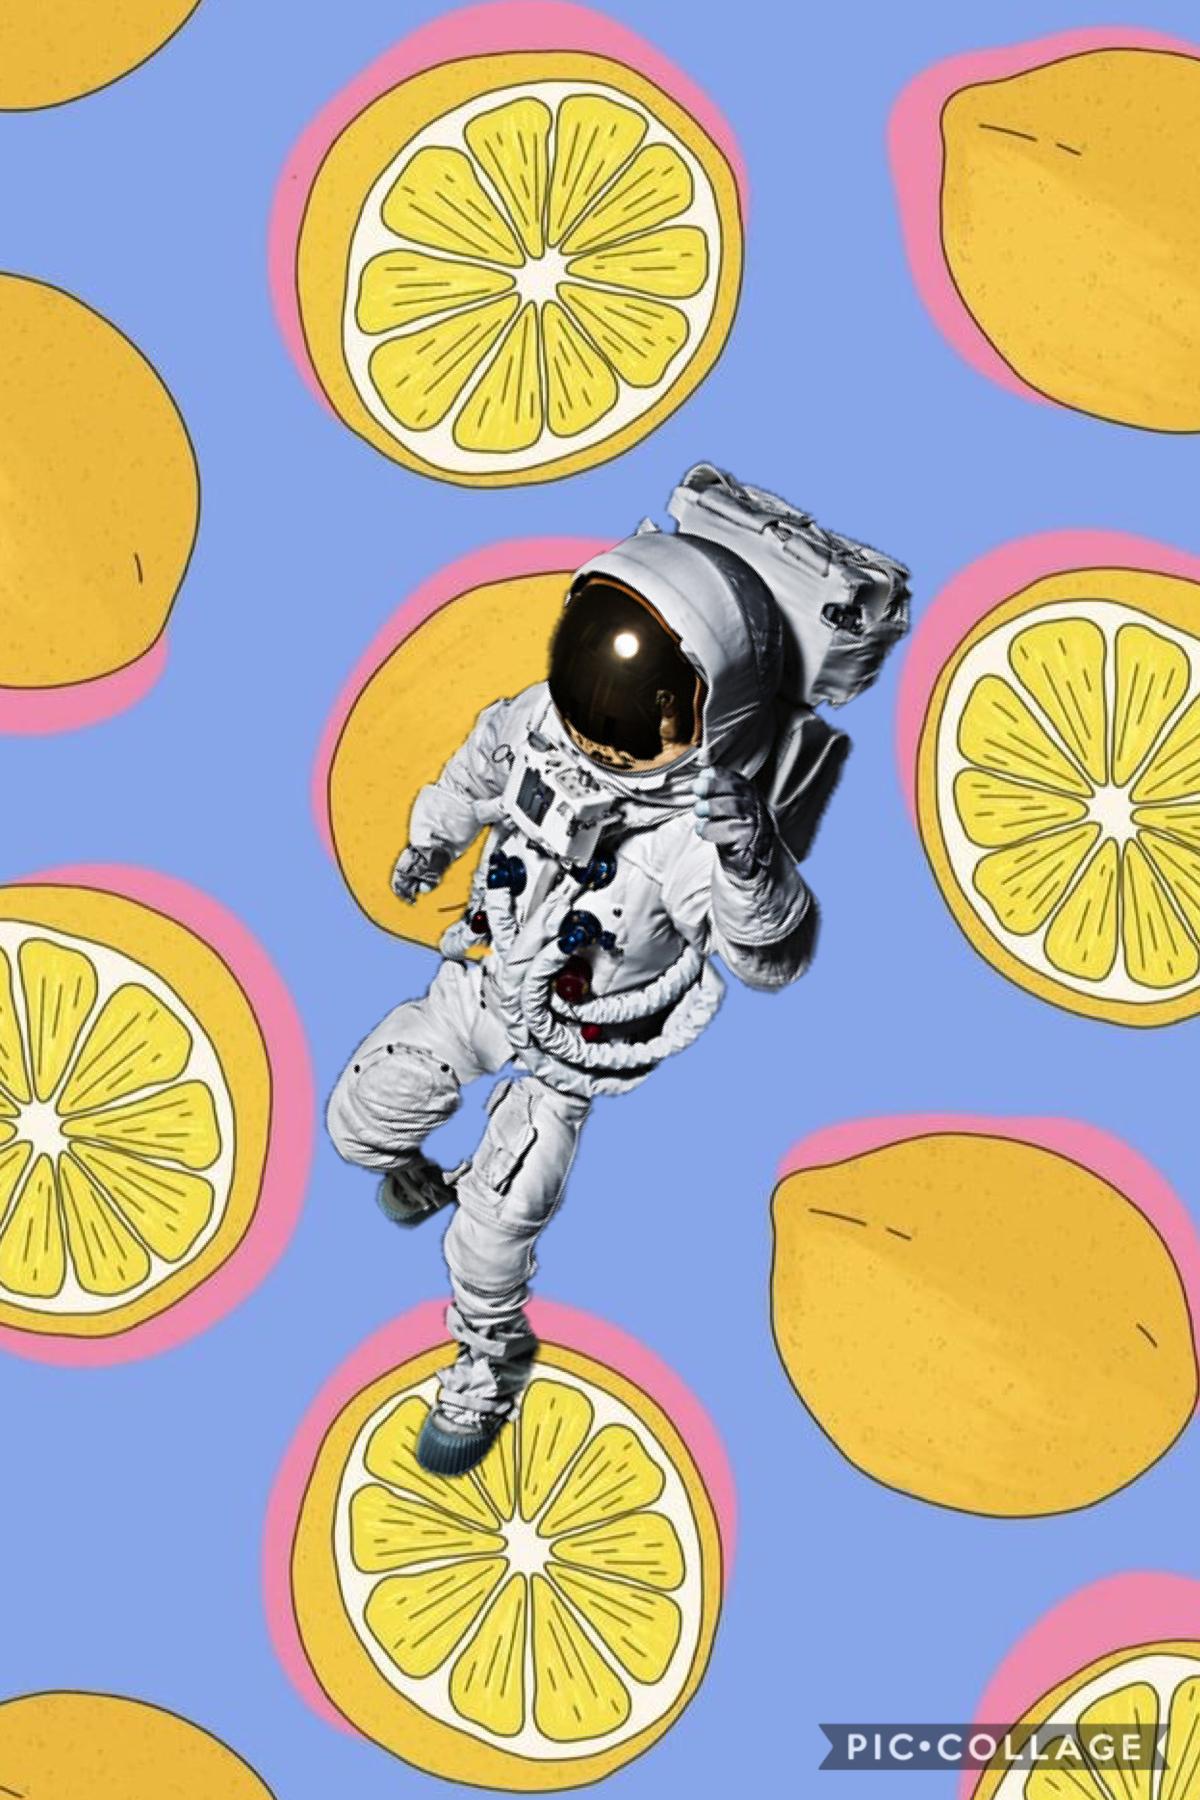 When life gives you lemons, make an astronaut 